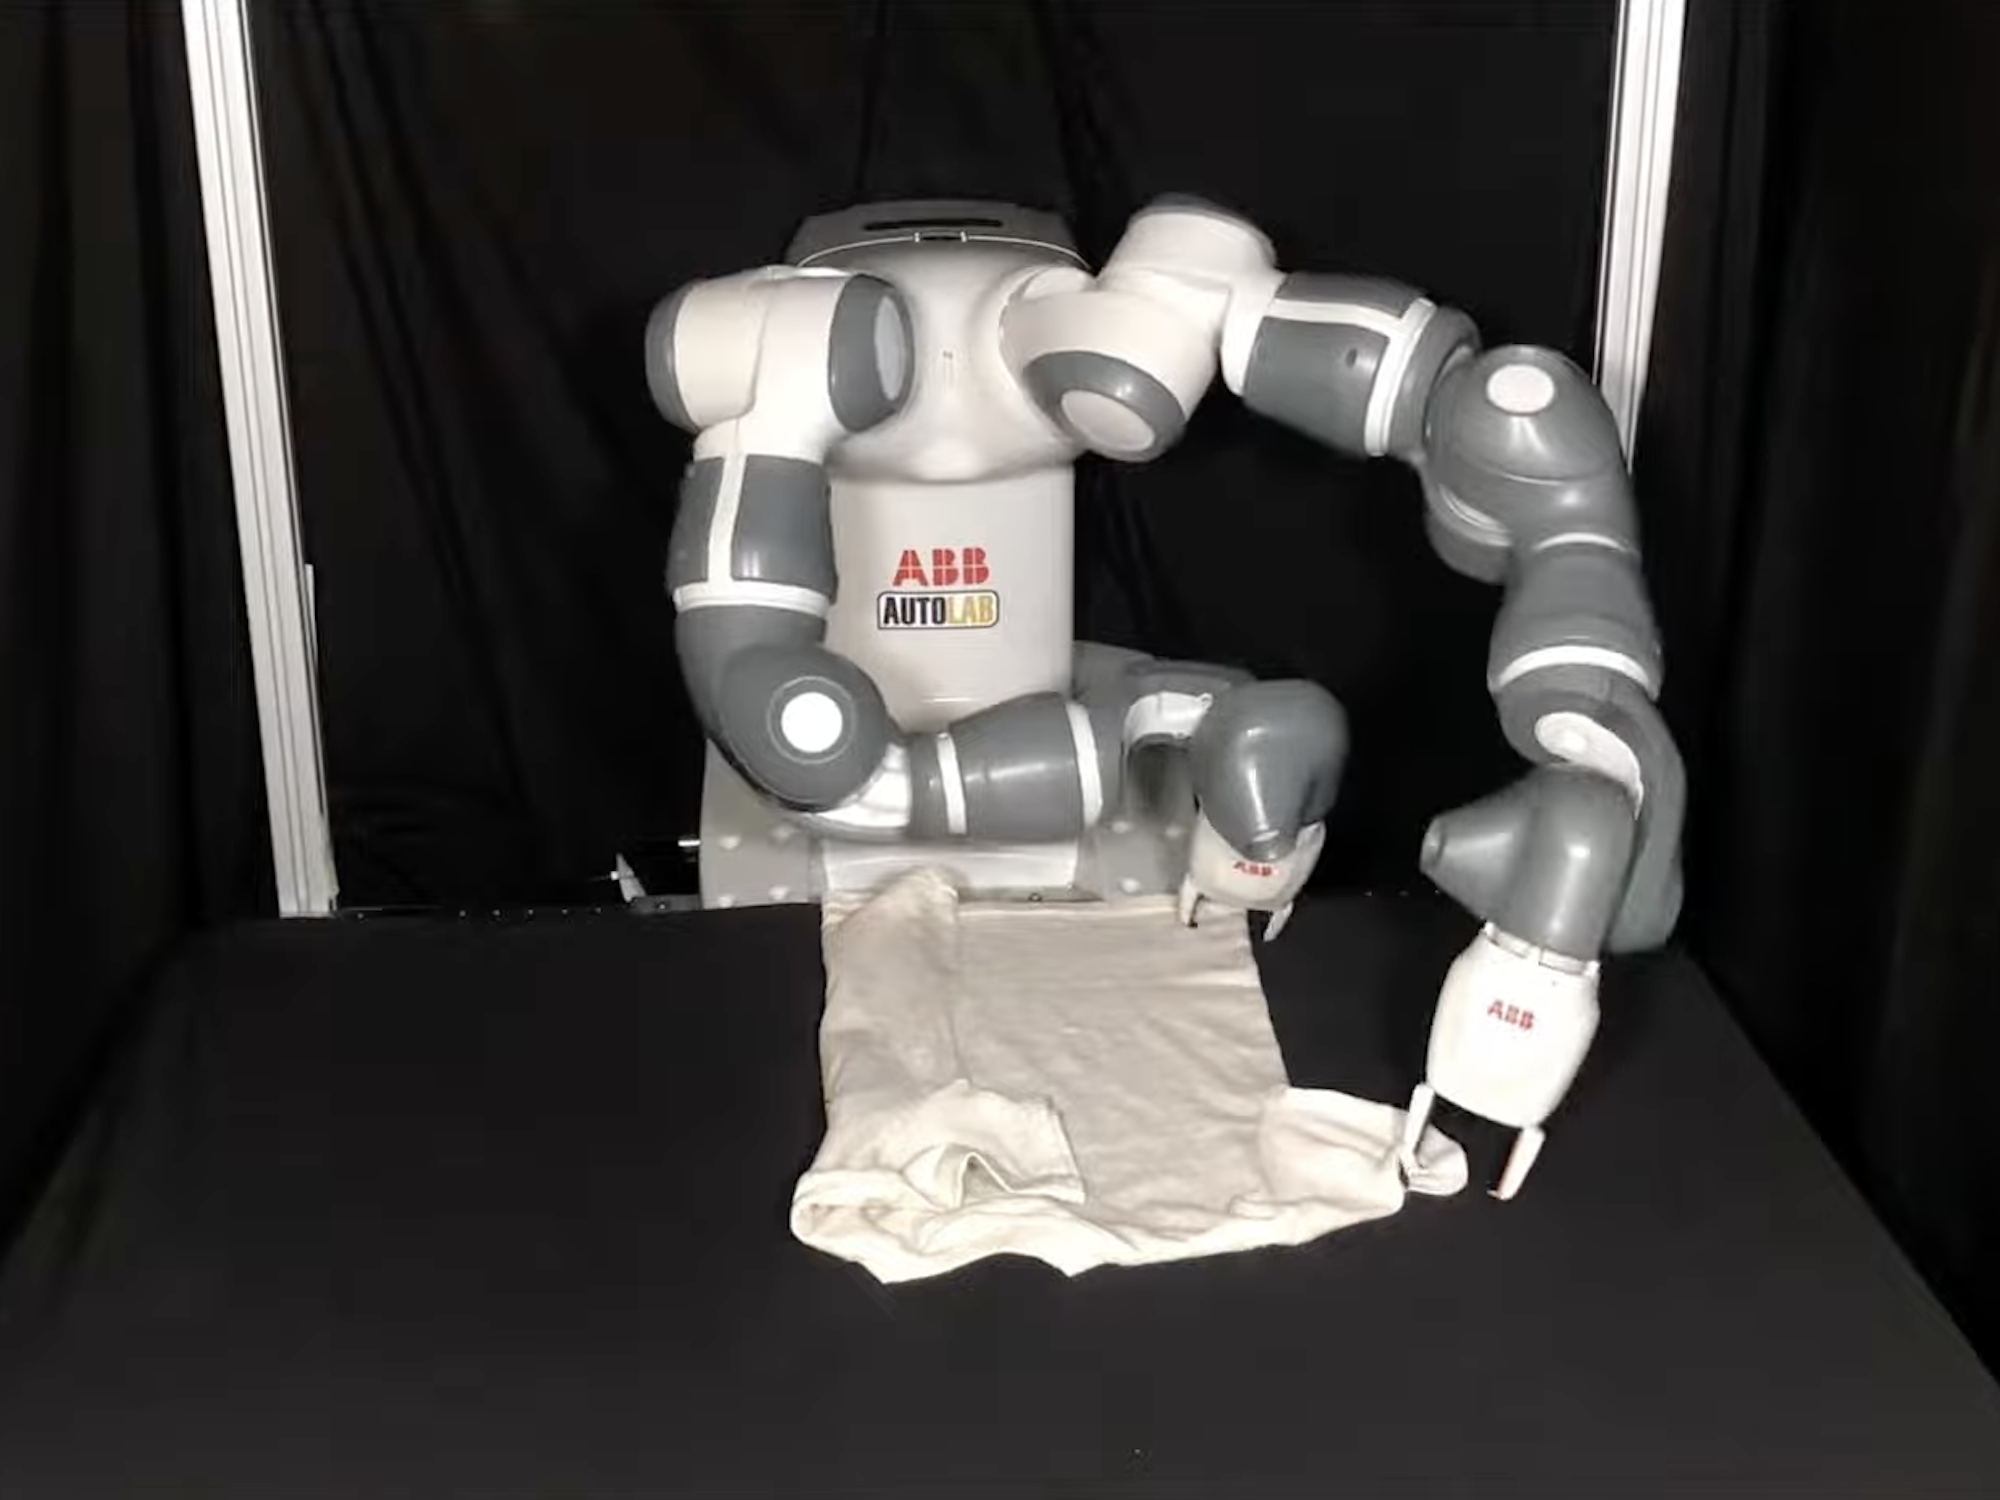 Two armed laundry folding robot folding a t-shirt